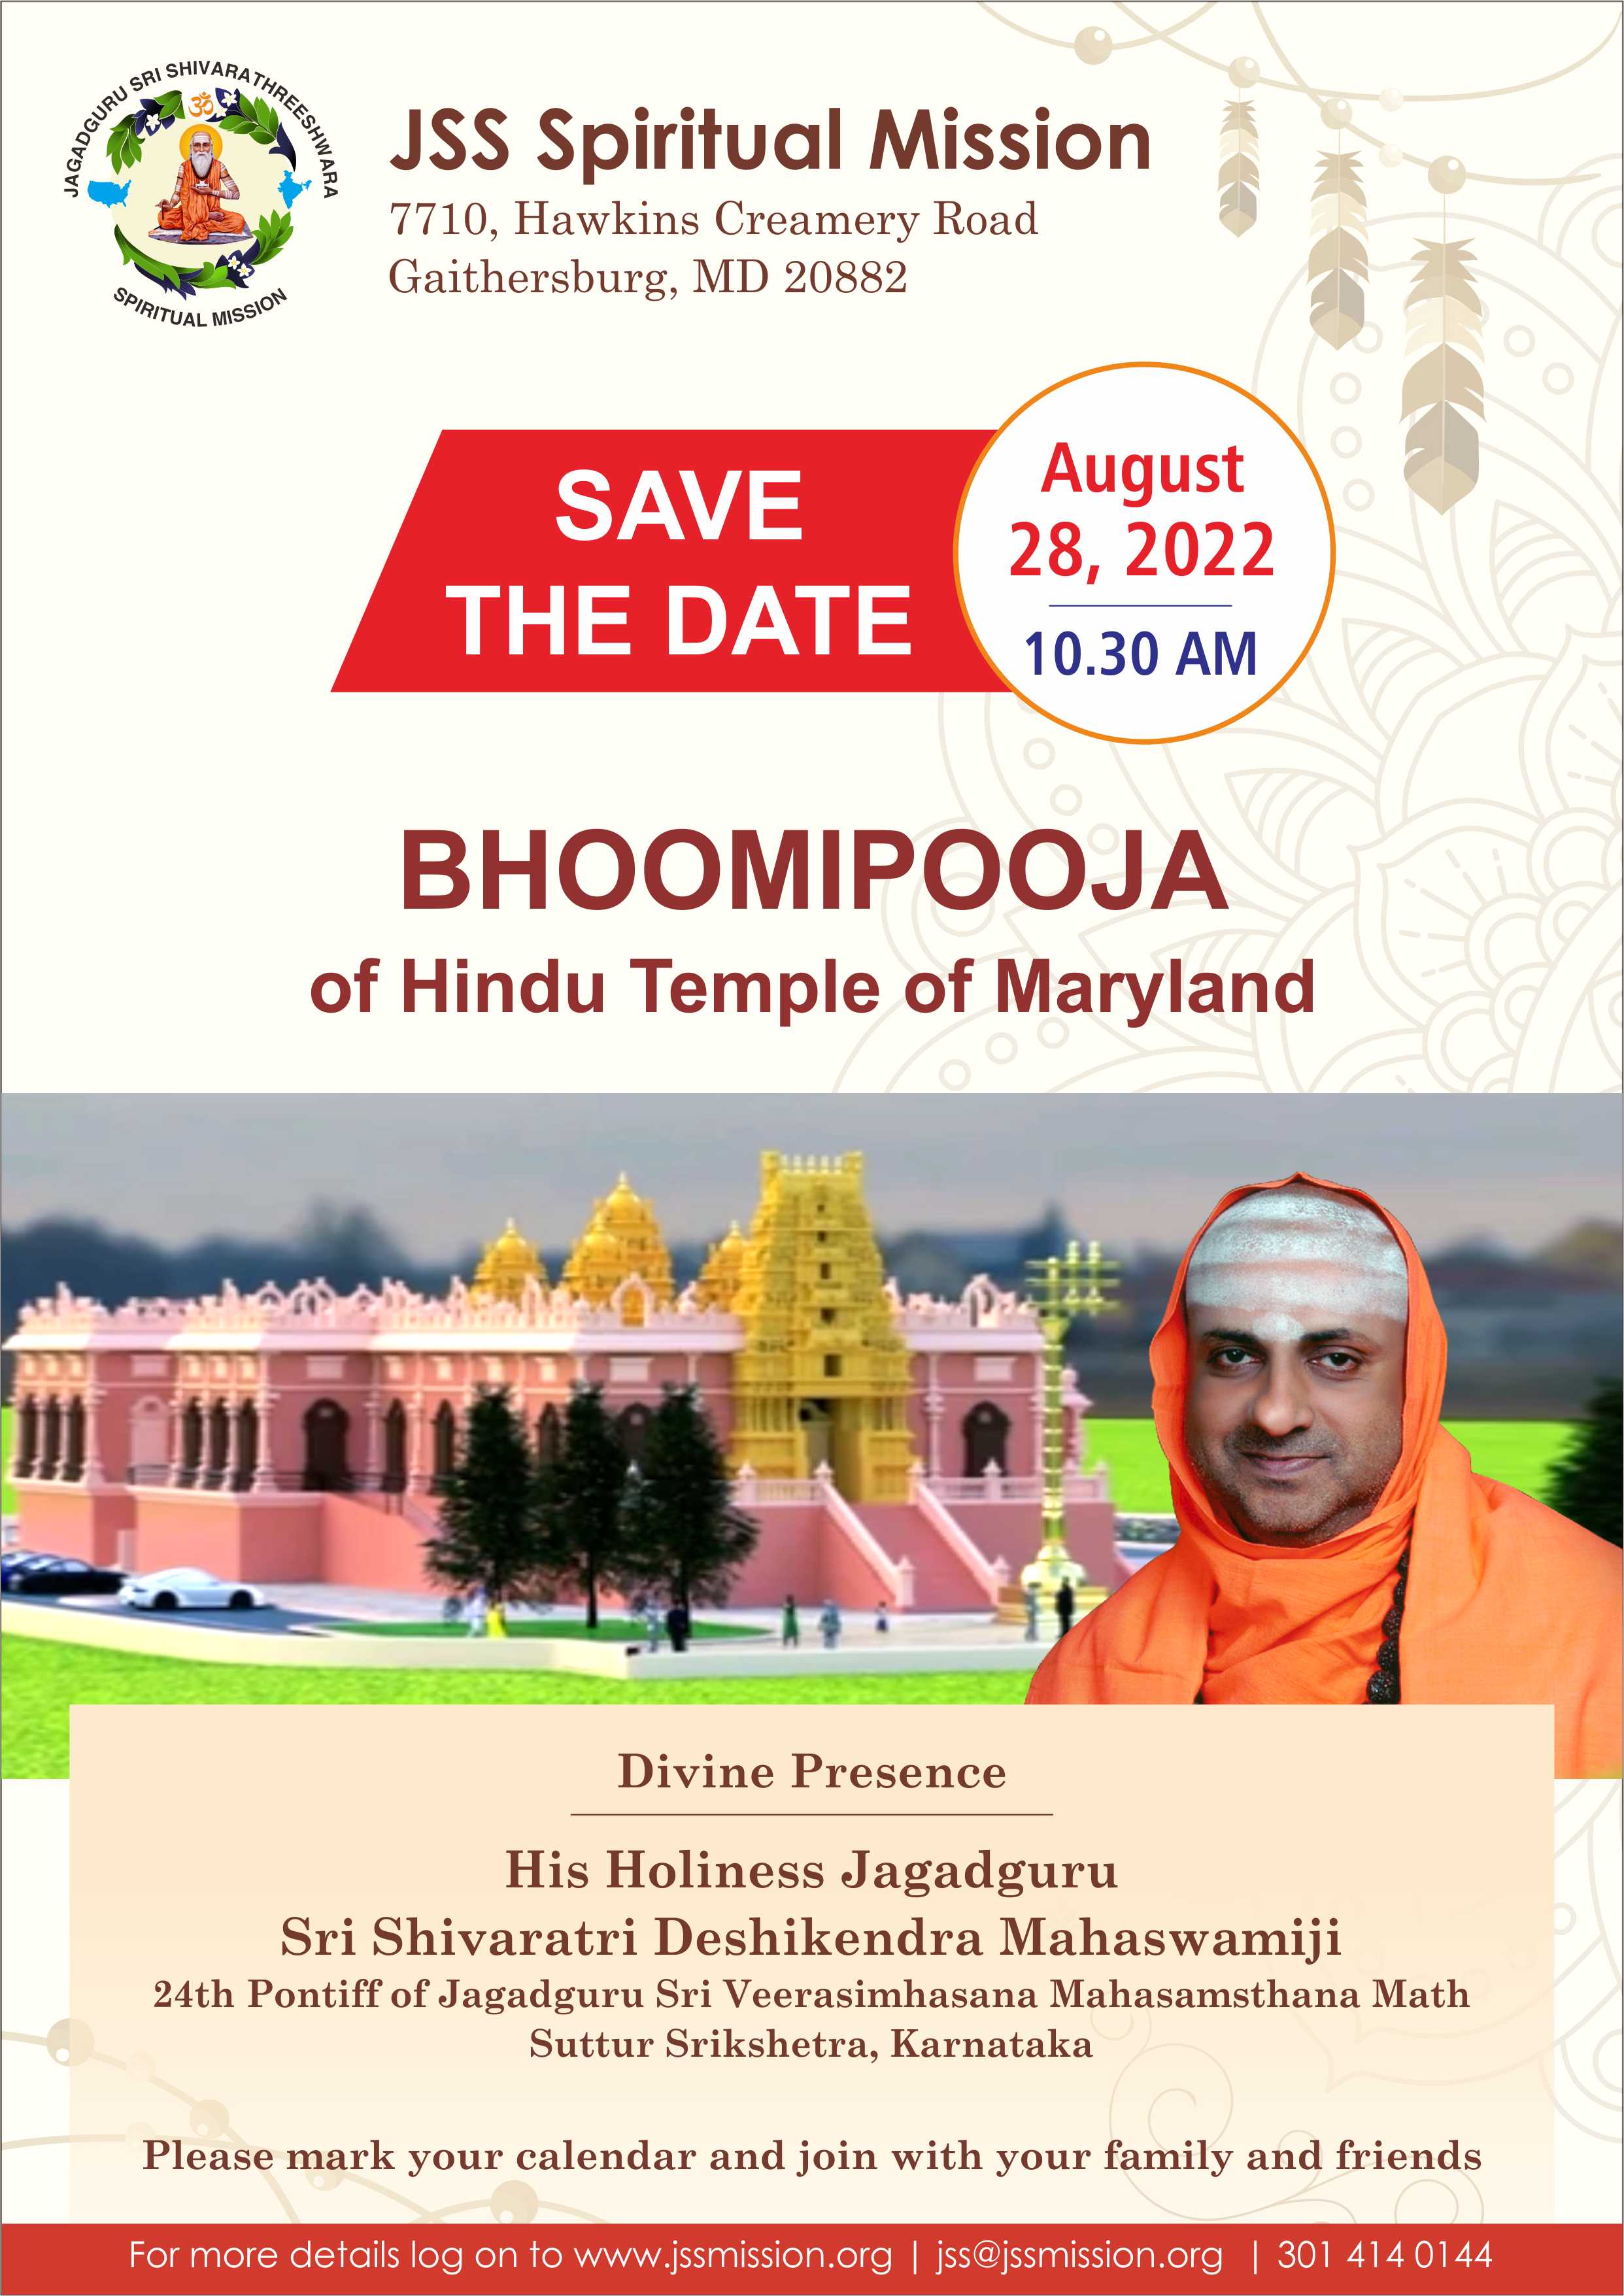 Program: Bhoomi Pooja of Temple of Maryland in the divine presence of HH Jagadguru Sri Shivarathri Deshikendra Mahaswamiji Date: August 28, 2022, Sunday Place: JSS Spiritual Mission, Maryland, USA